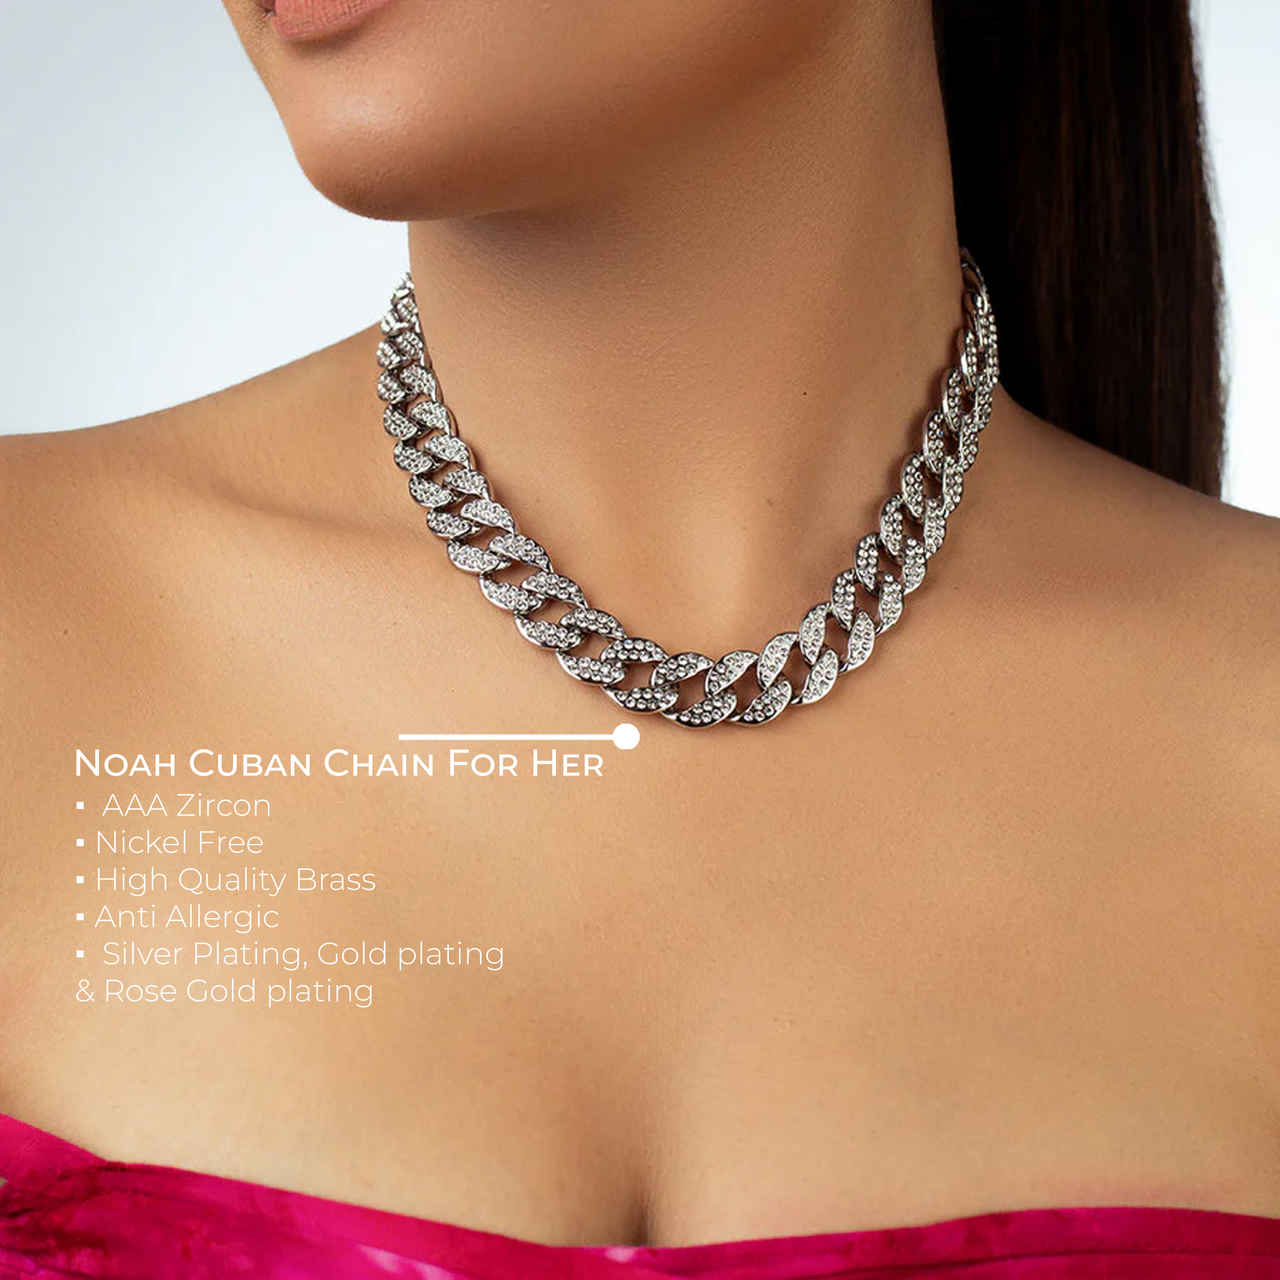 Noah Cuban Chain For Her